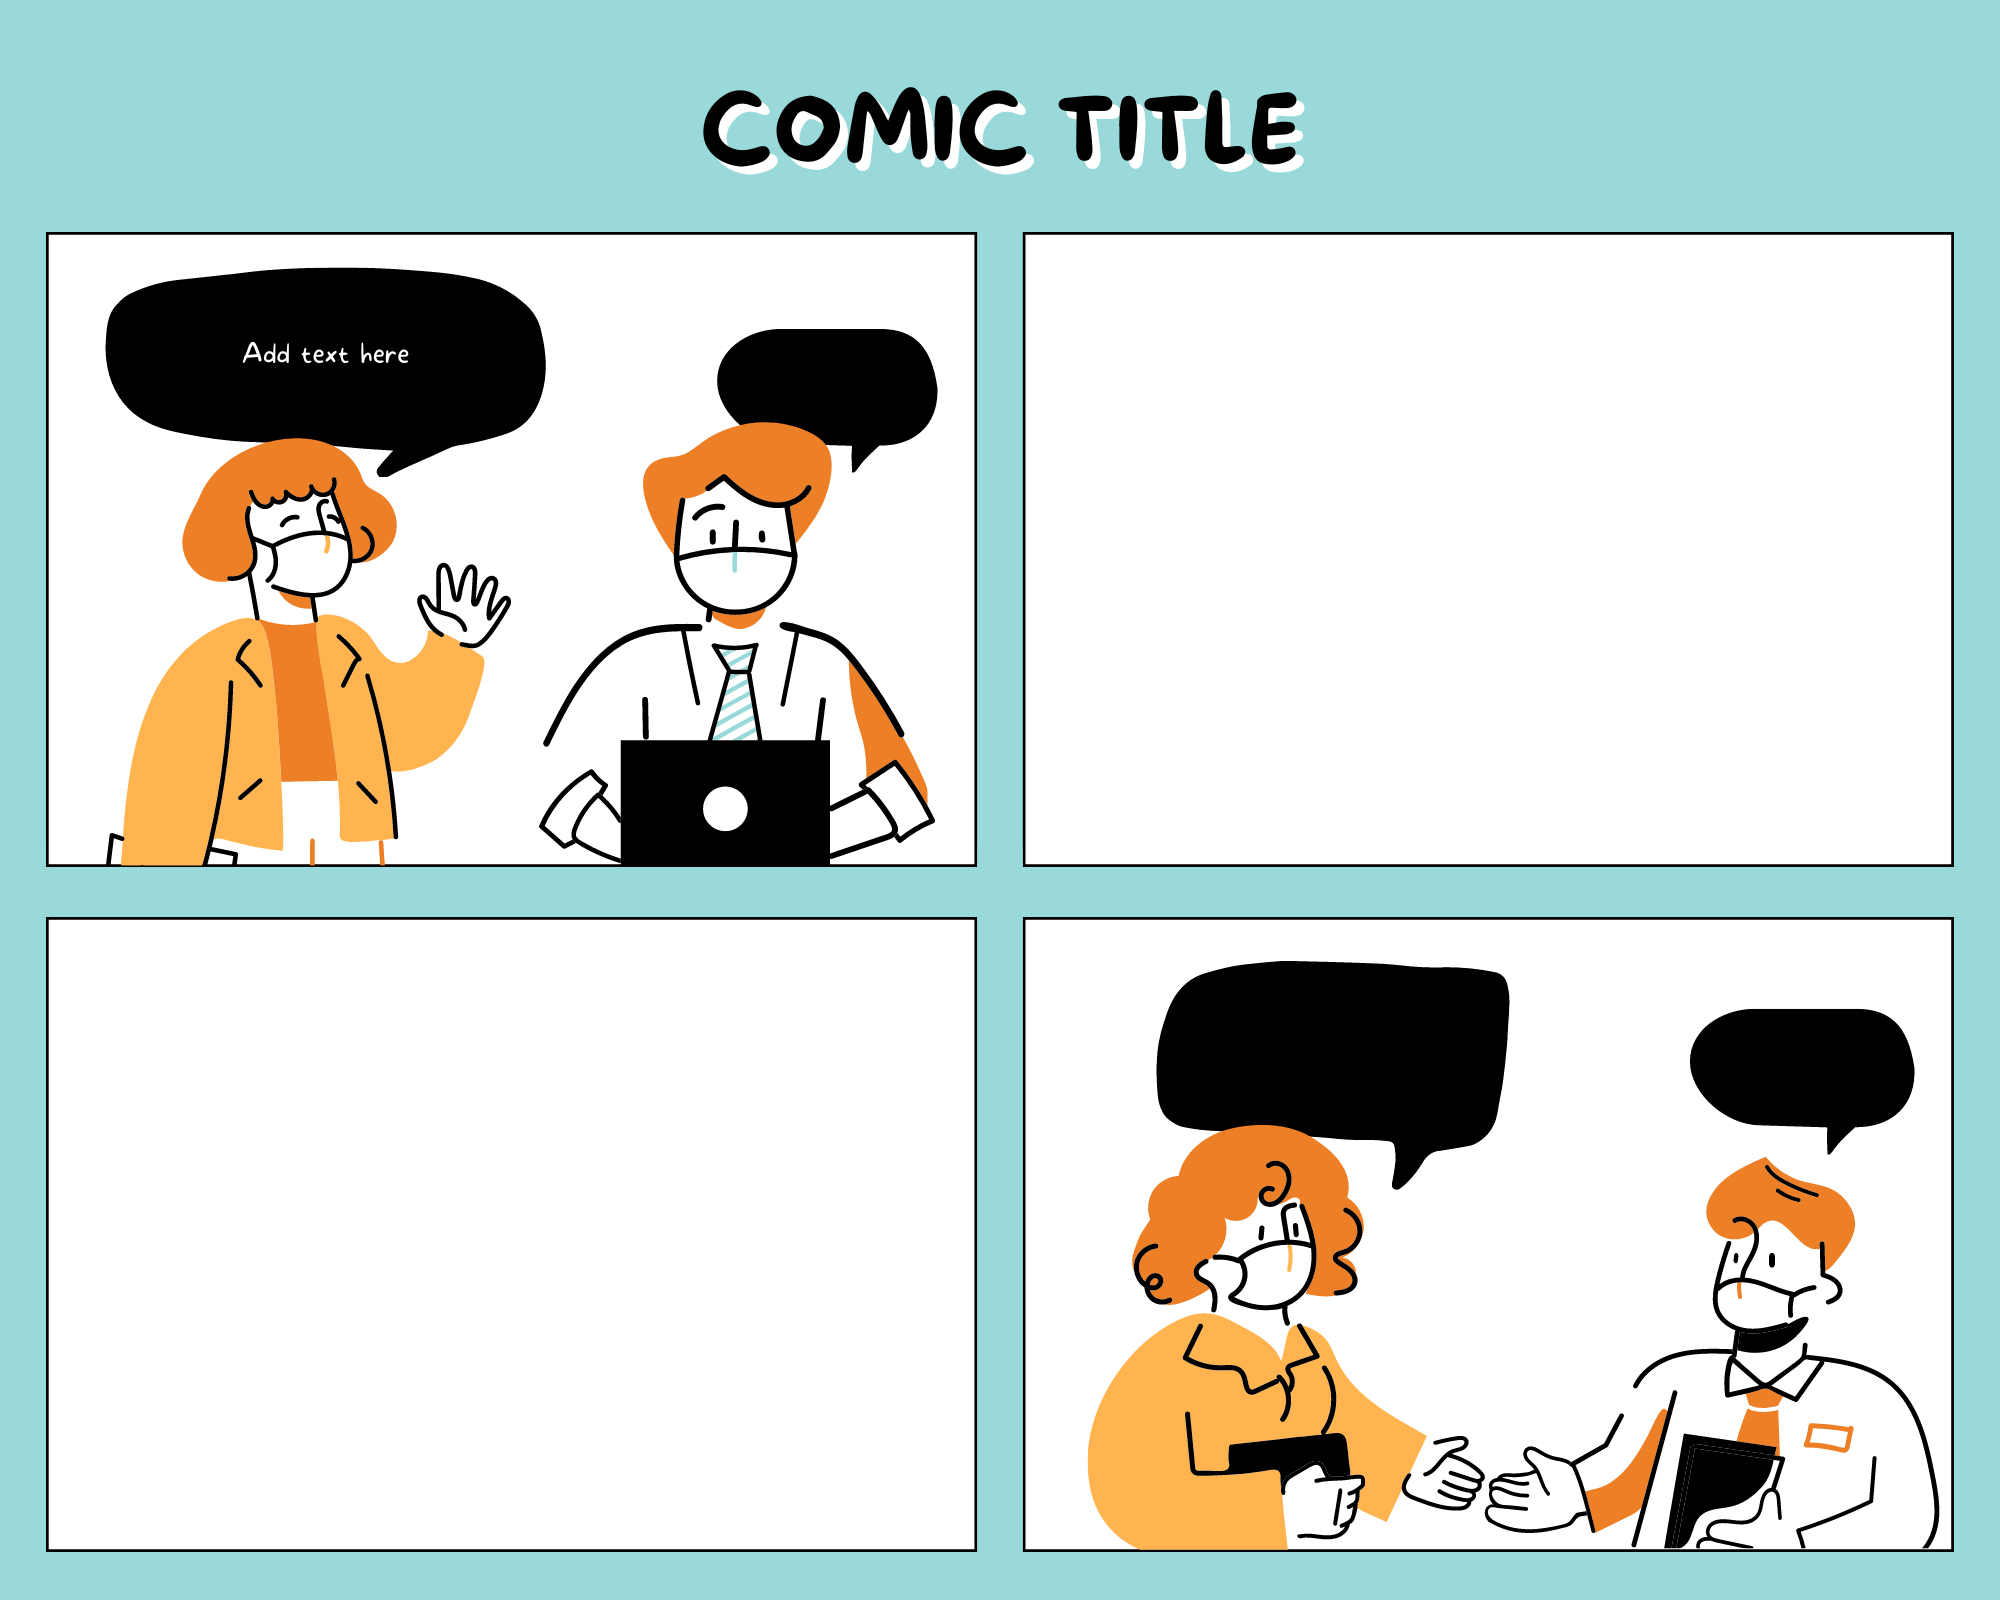 comic strips